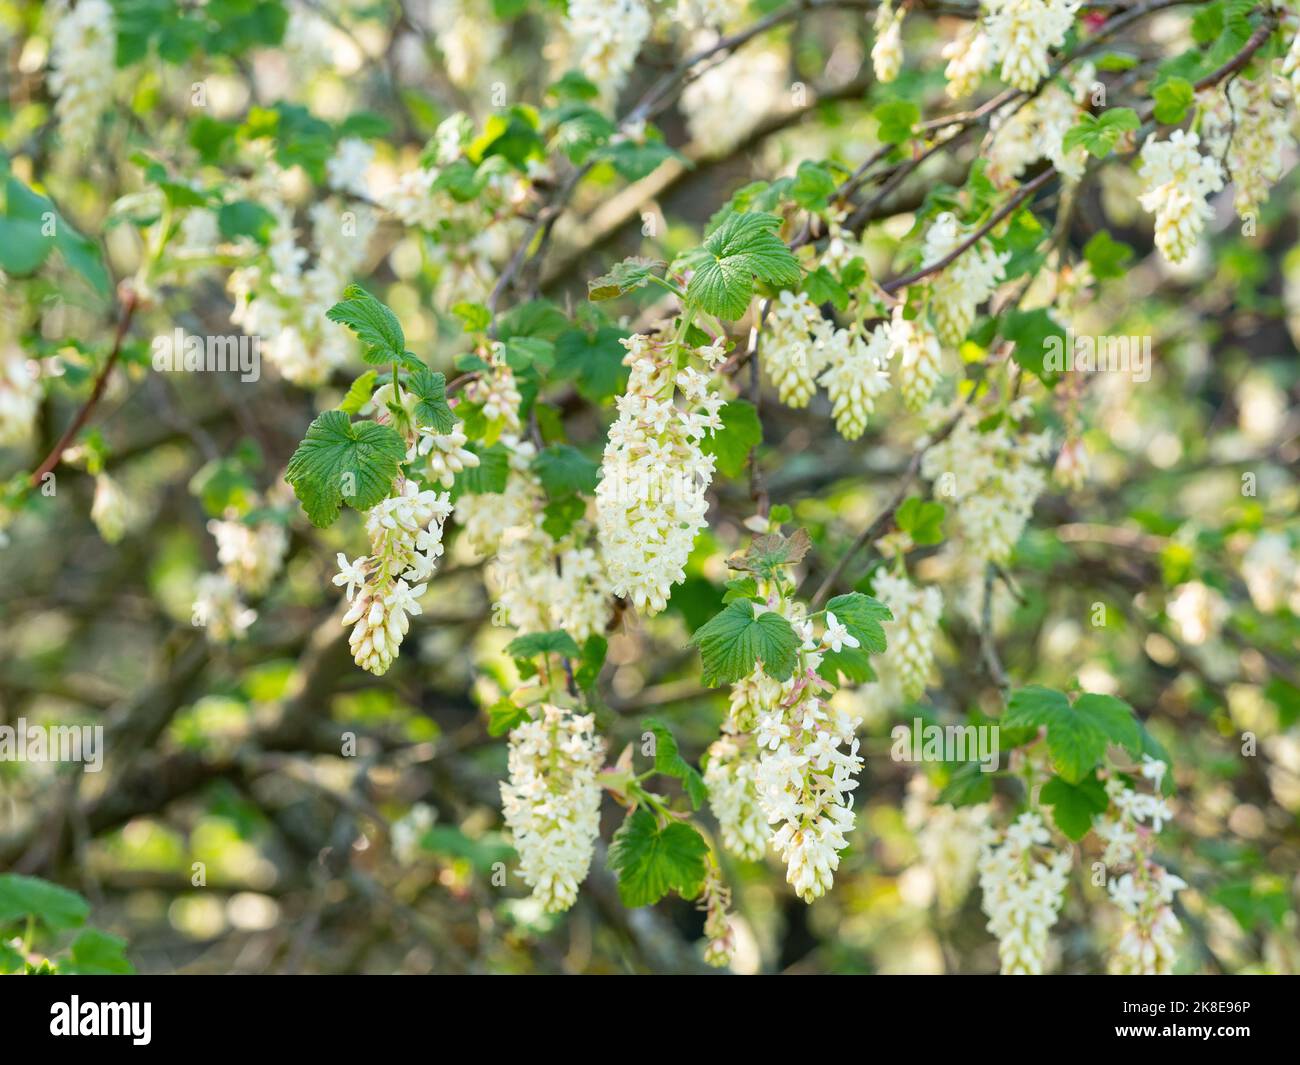 Ribes Sanguineum 'Tydeman's White', flowering currant Stock Photo